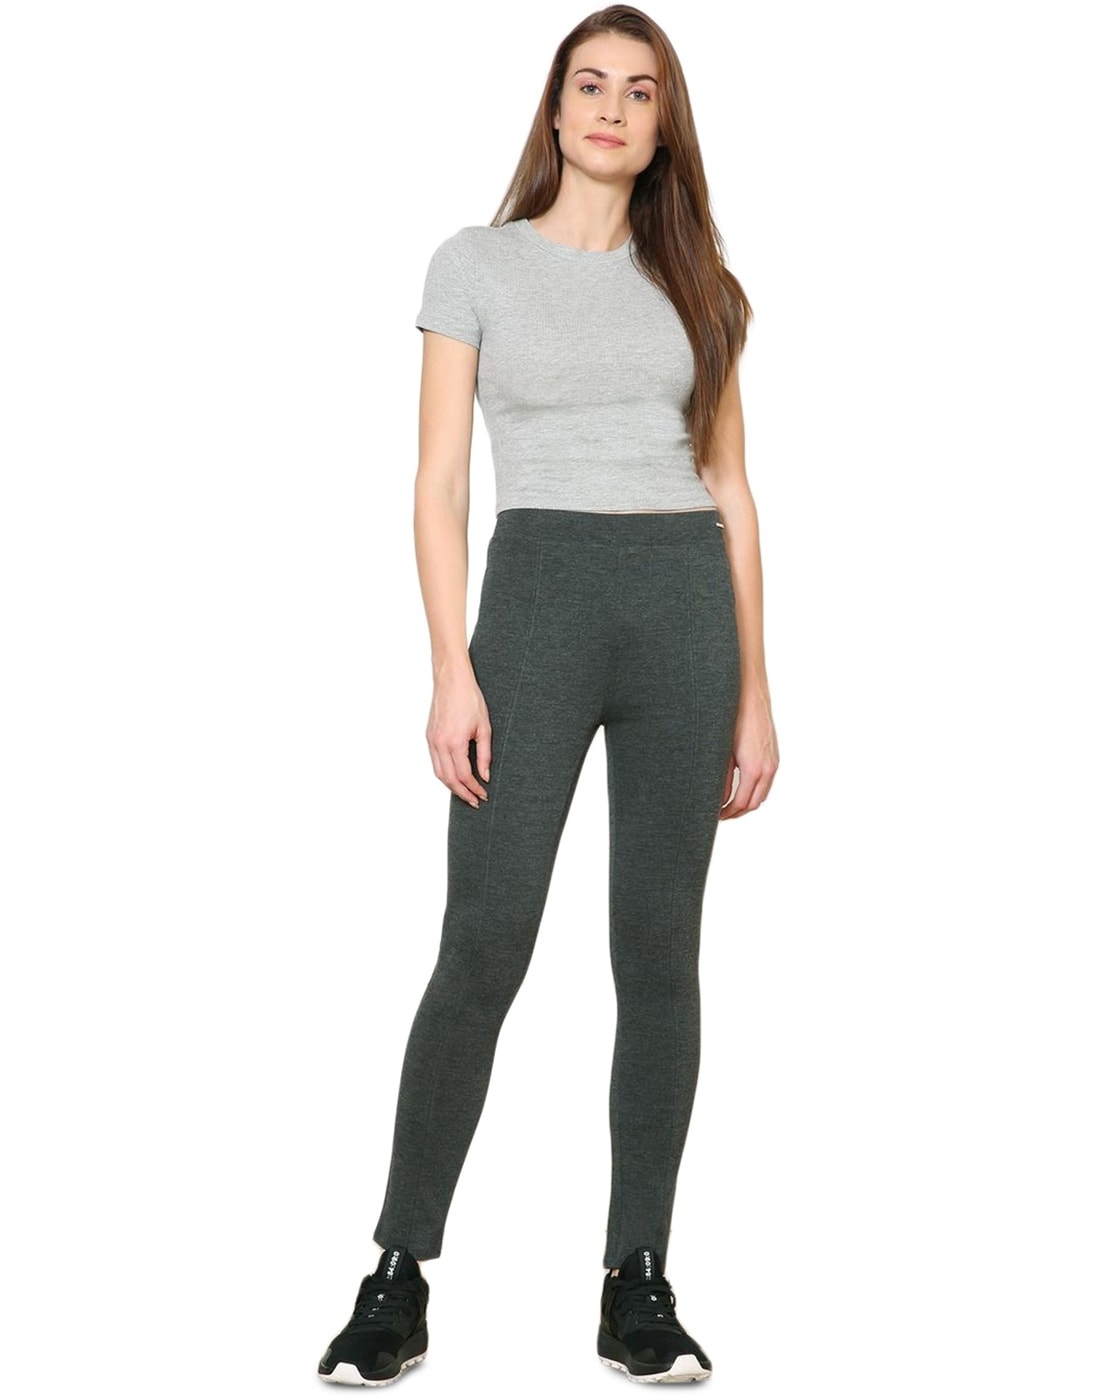 Buy Charcoal Melange Track Pants for Women by VAN HEUSEN Online